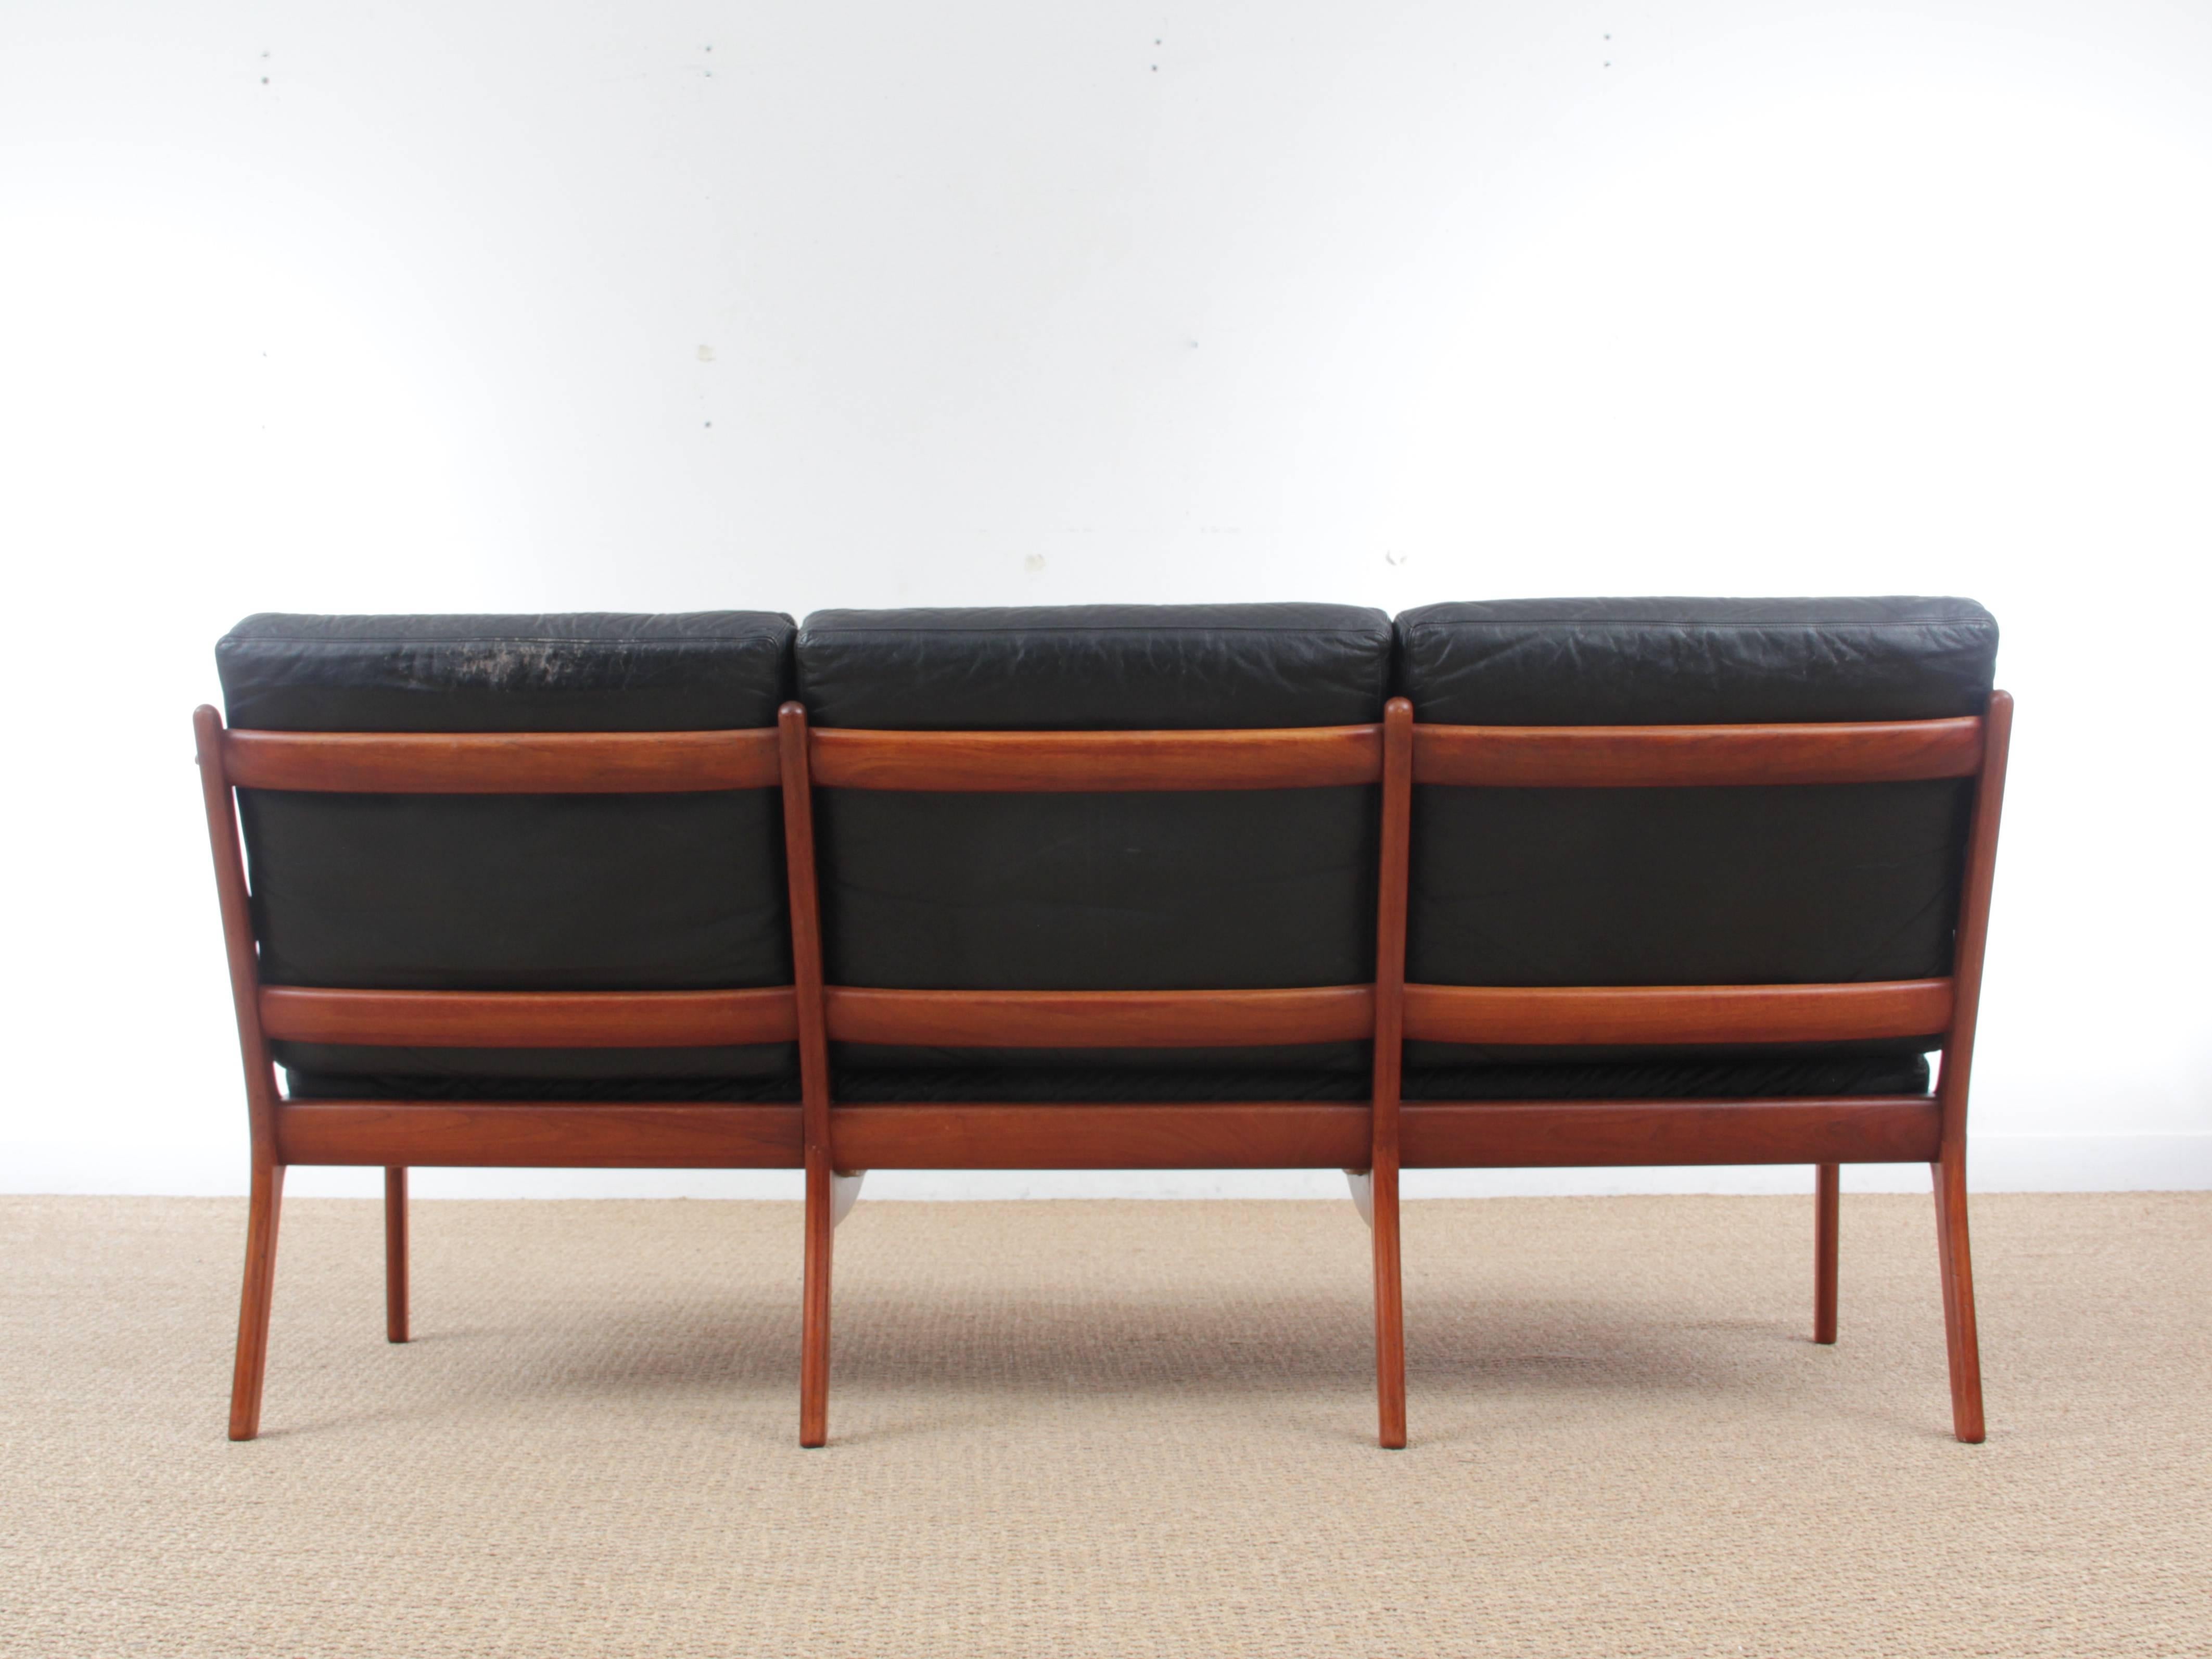 Mid-20th Century Danish Mid-Century Modern Sofa Three-Seats by Ole Wanscher for Paul Jepesen